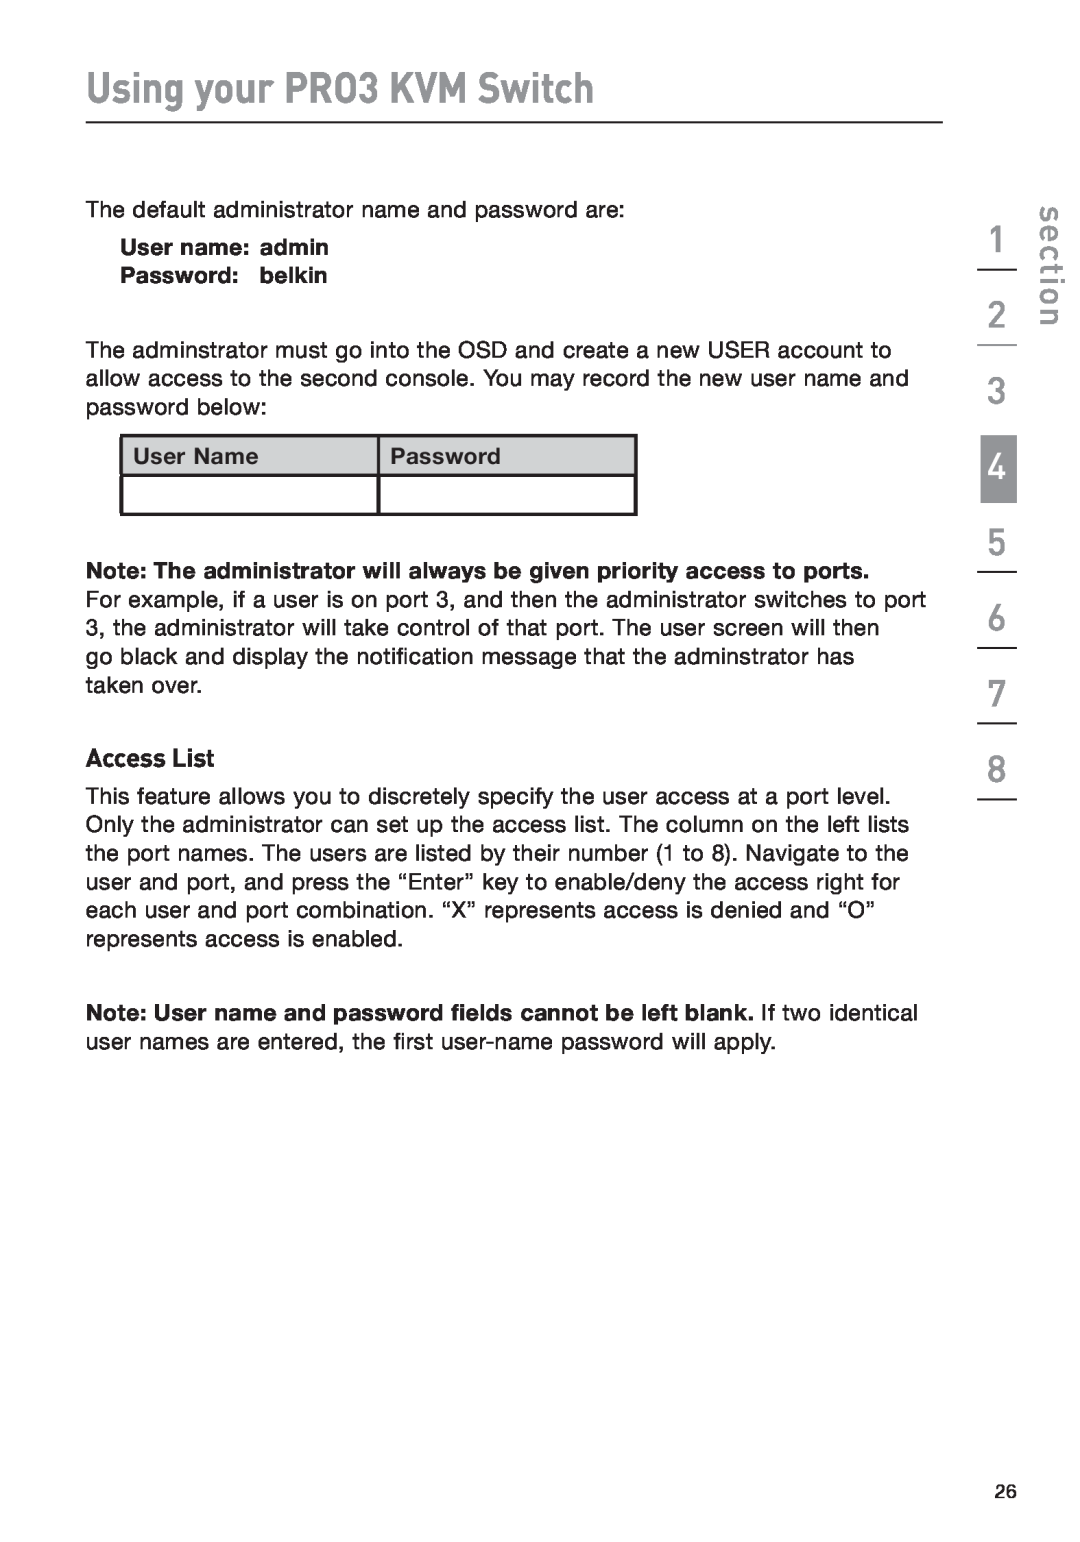 Belkin F1DA208Z manual Access List, User name admin Password belkin, User Name, Using your PRO3 KVM Switch, section 